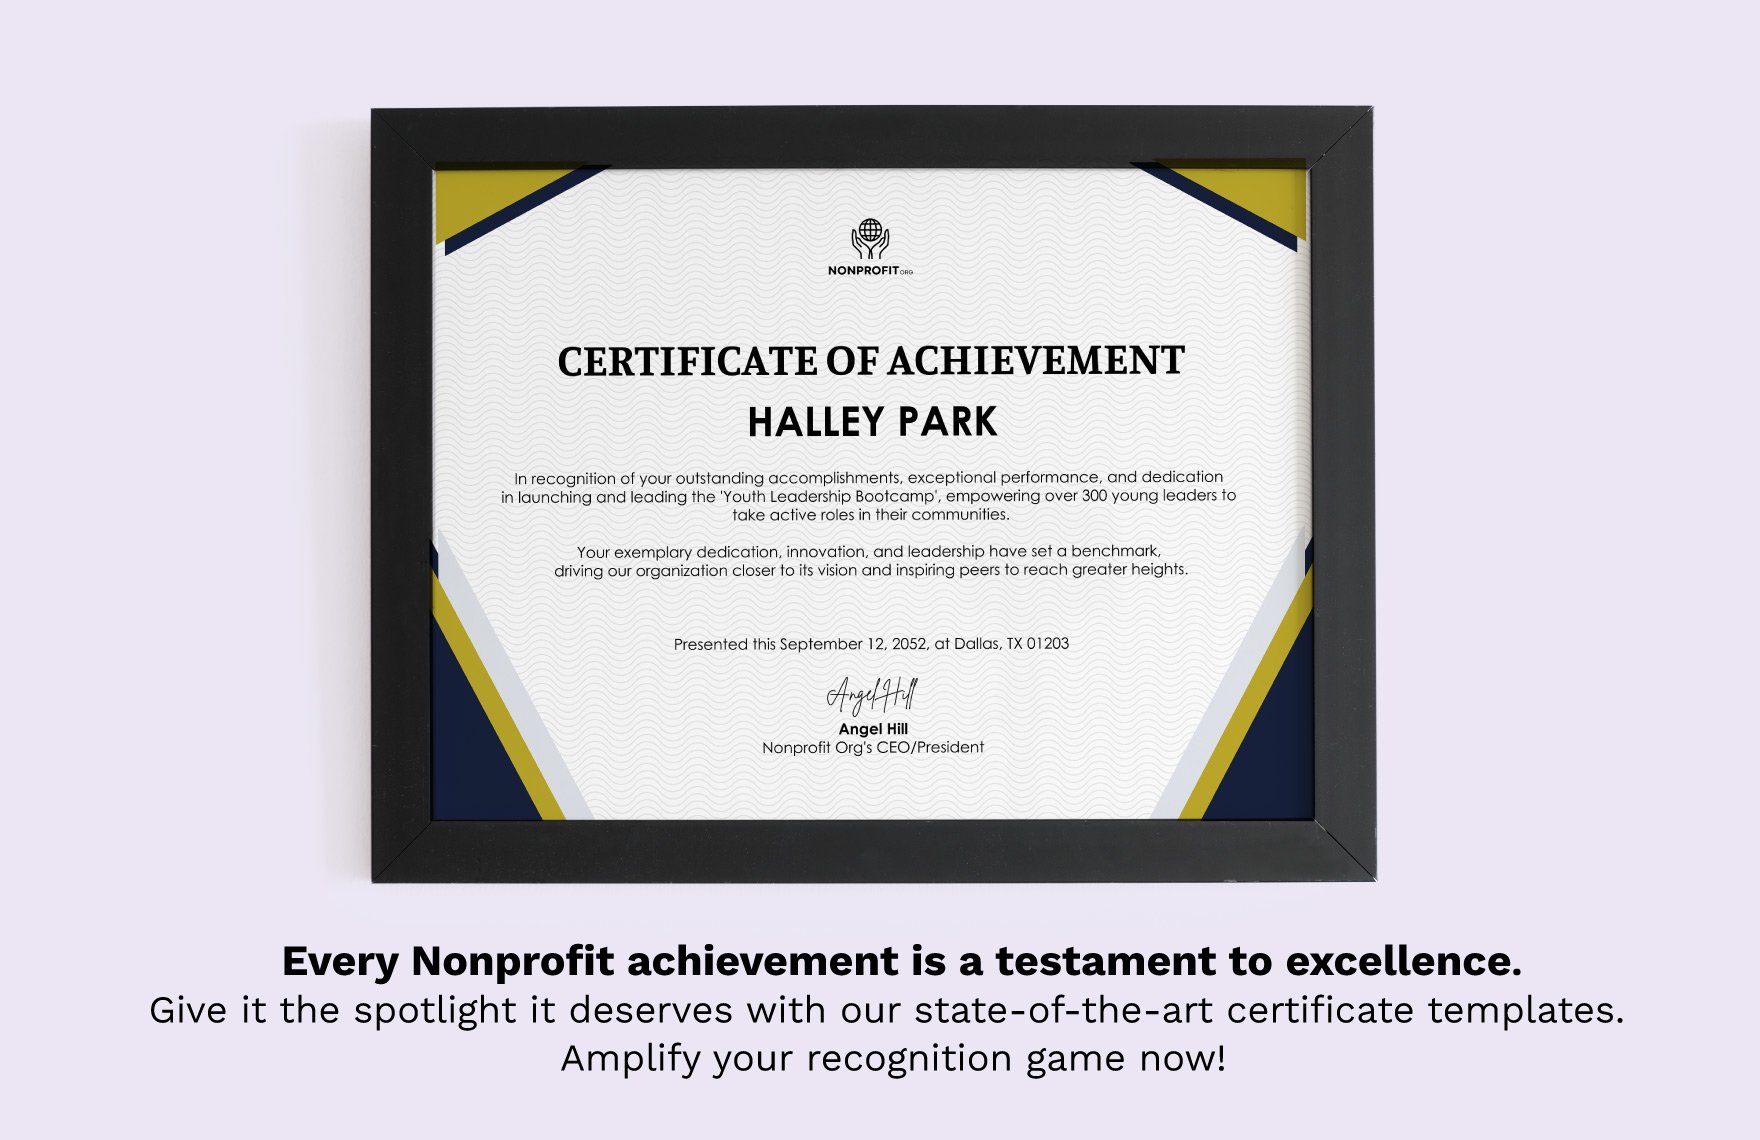 Nonprofit Organization Achievement Certificate Template